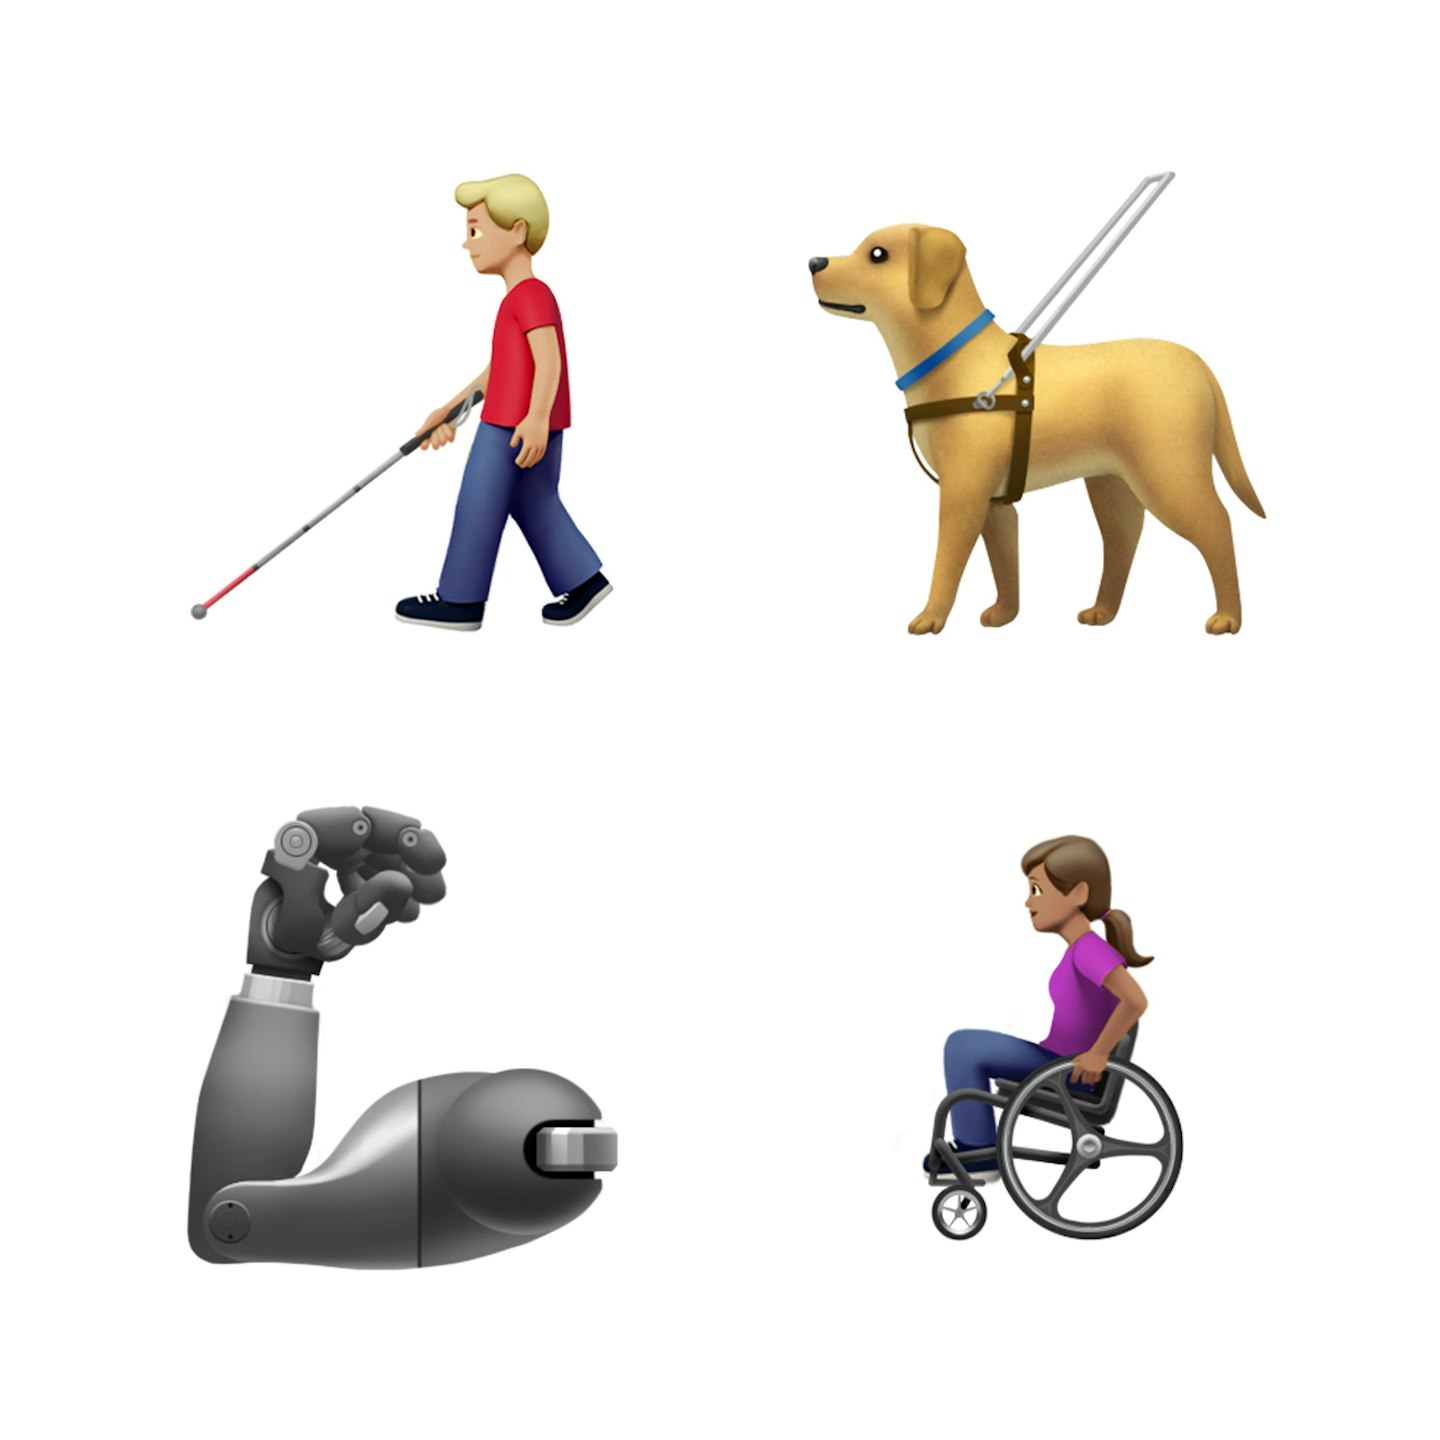 Emojis to represent disabilities